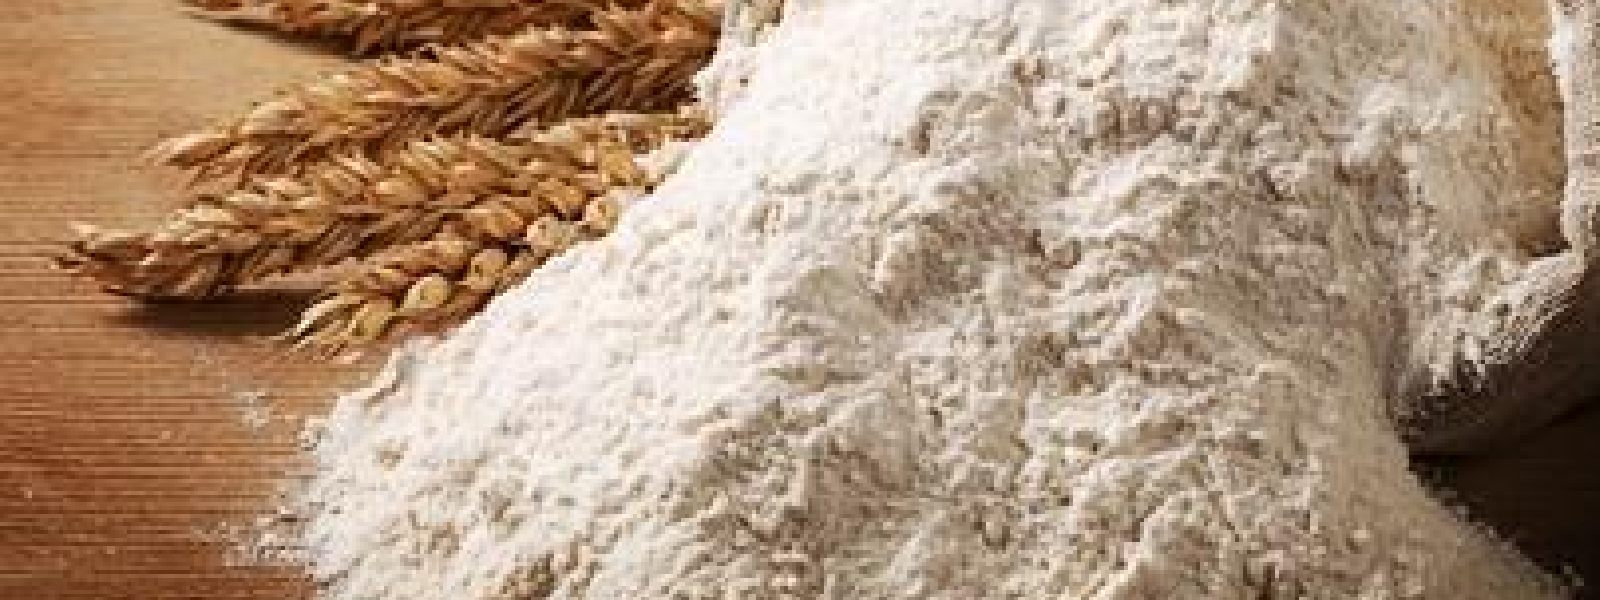 Rural bakeries shutdown due to increase in wheat flour prices